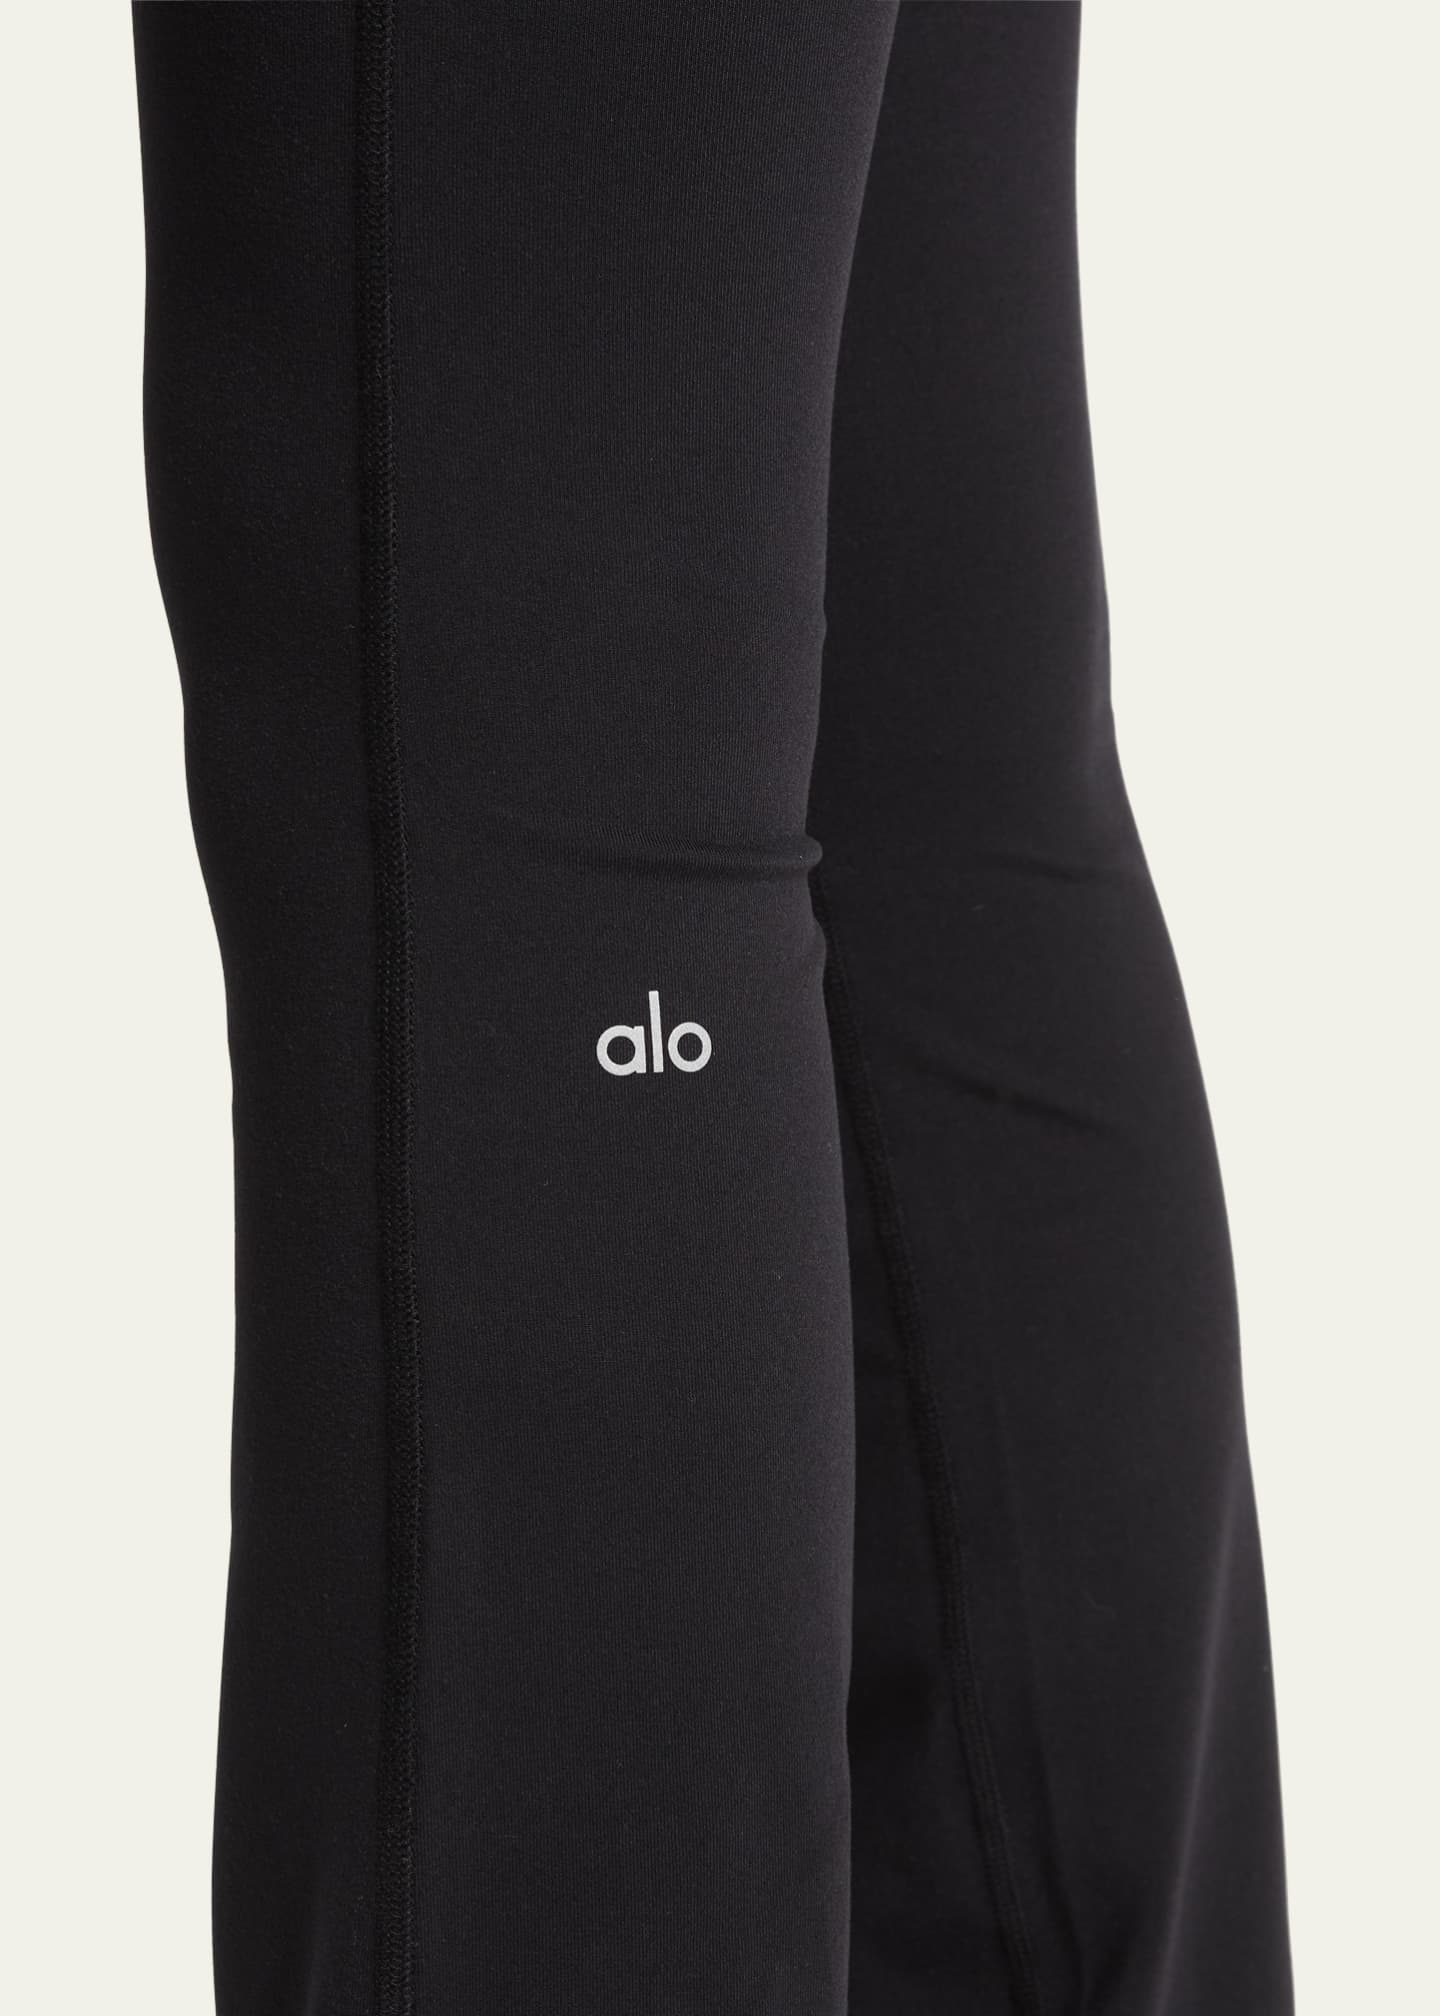 Airbrush high-rise bootcut pants in black - Alo Yoga